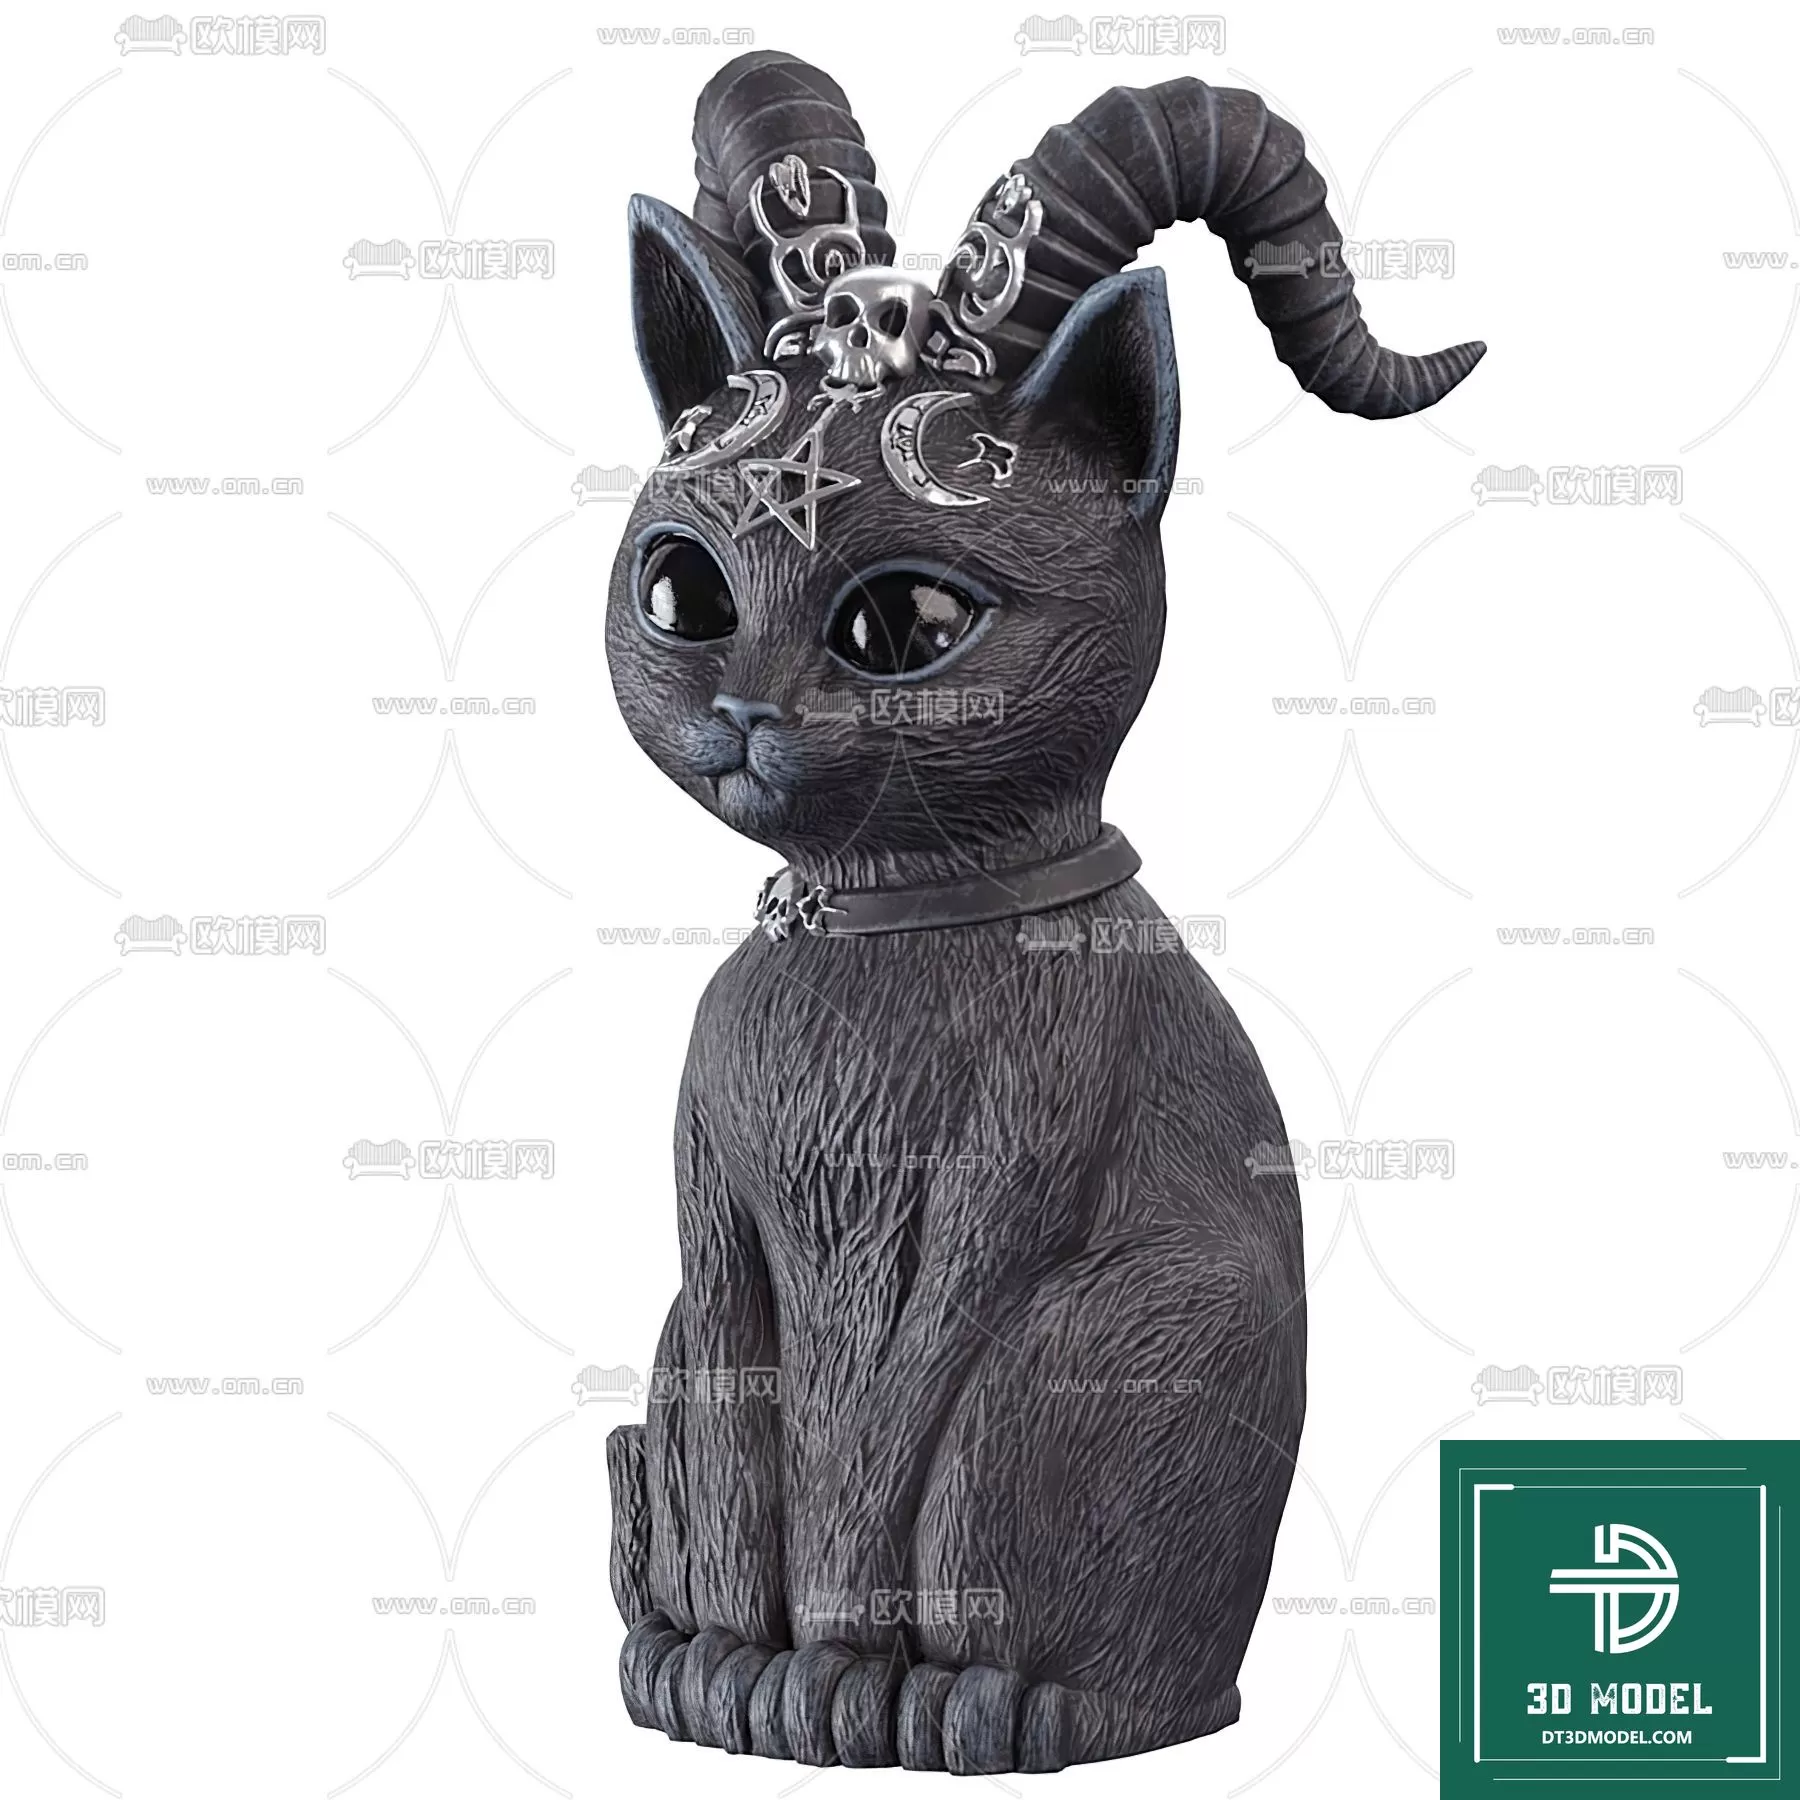 LUCKY CAT – 3D MODELS – 039 – PRO